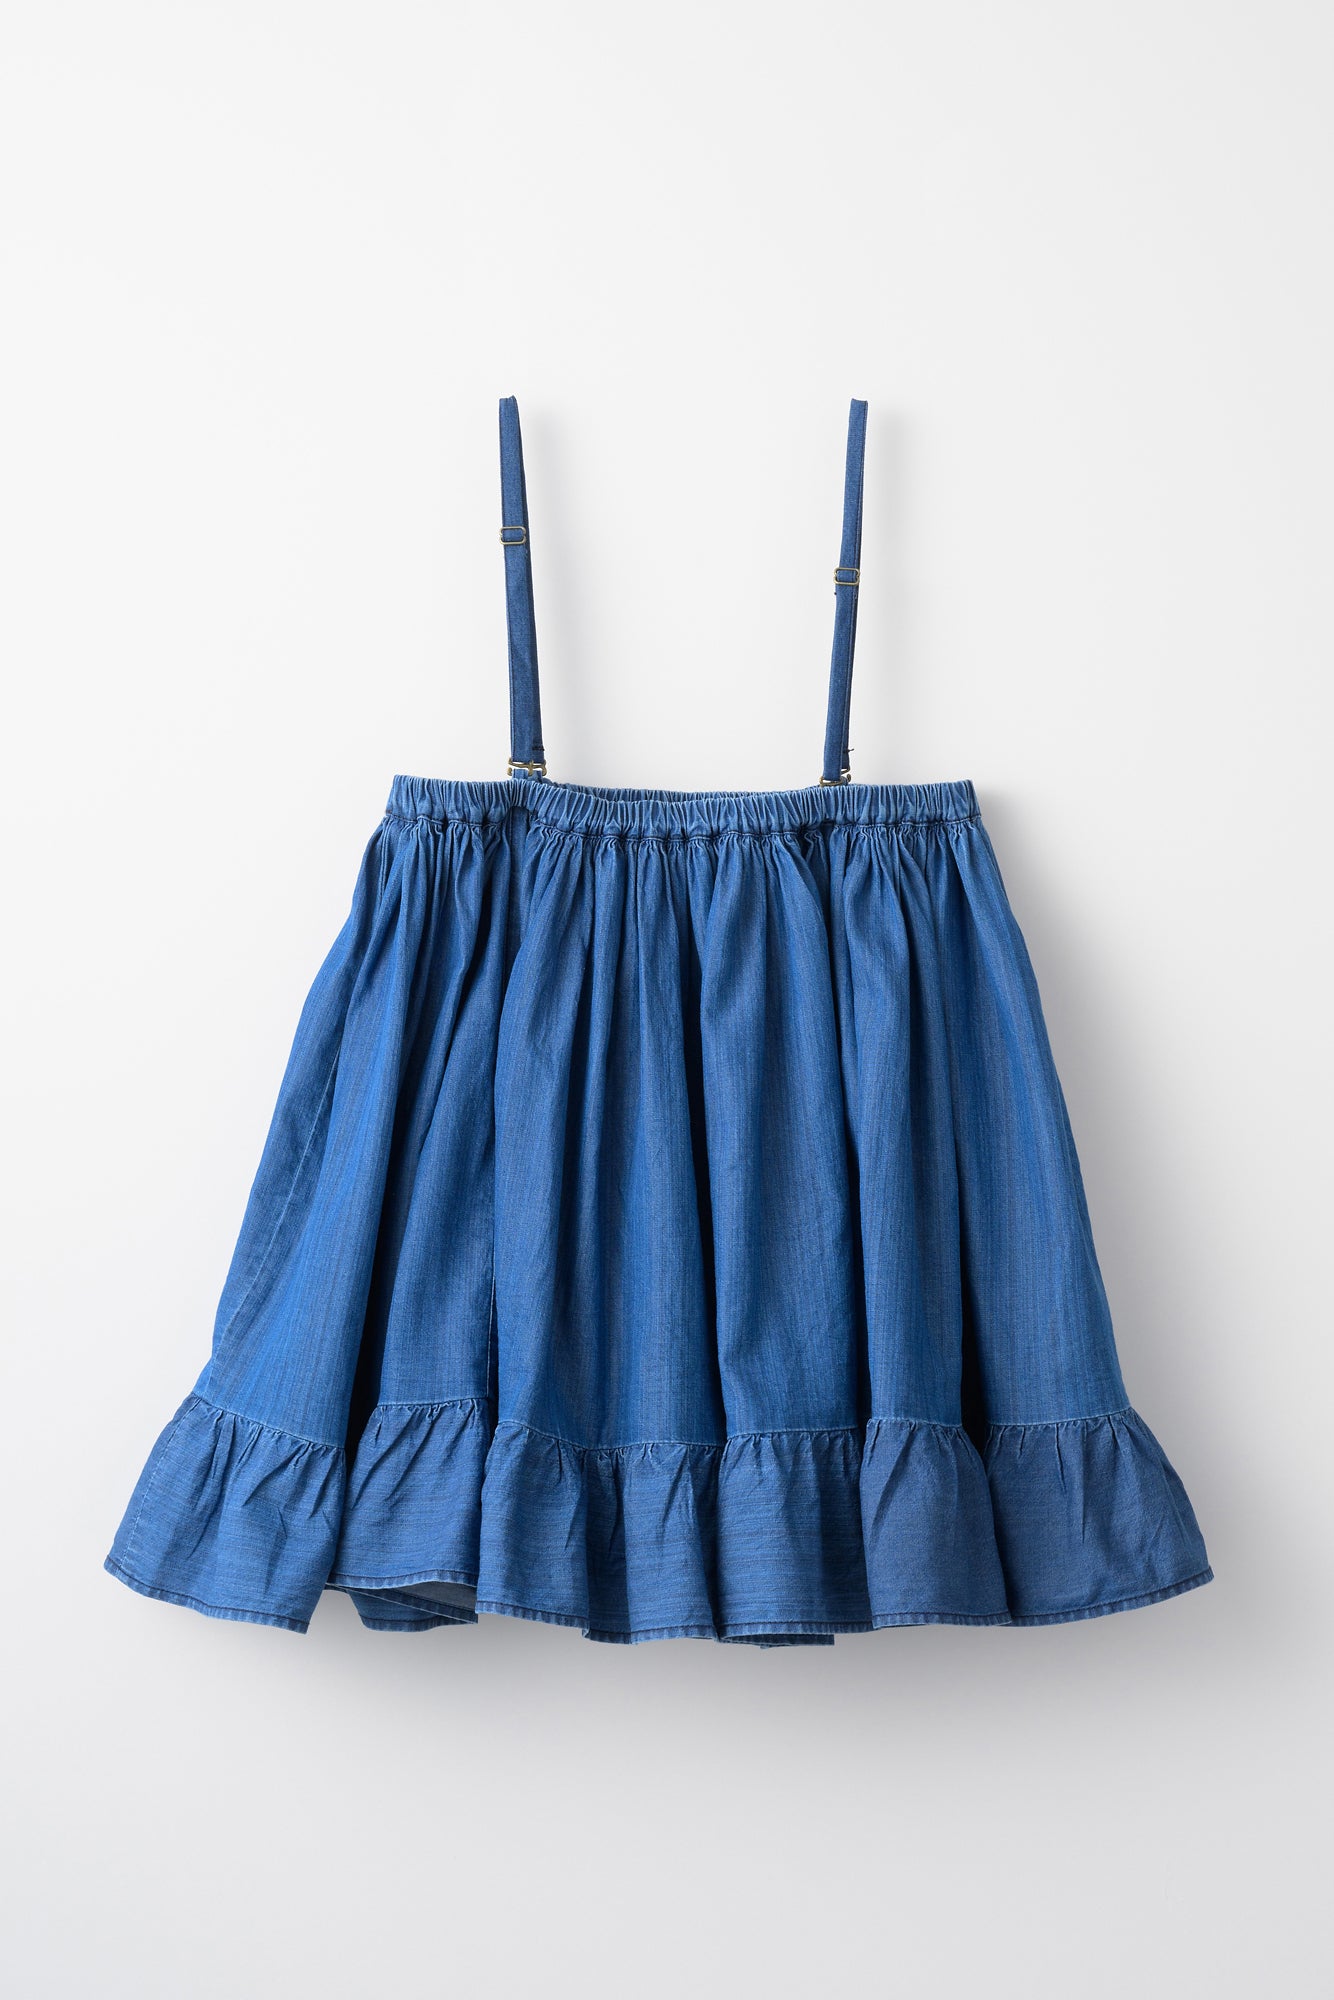 indigo 2way embroidery mini skirt │ BLUE